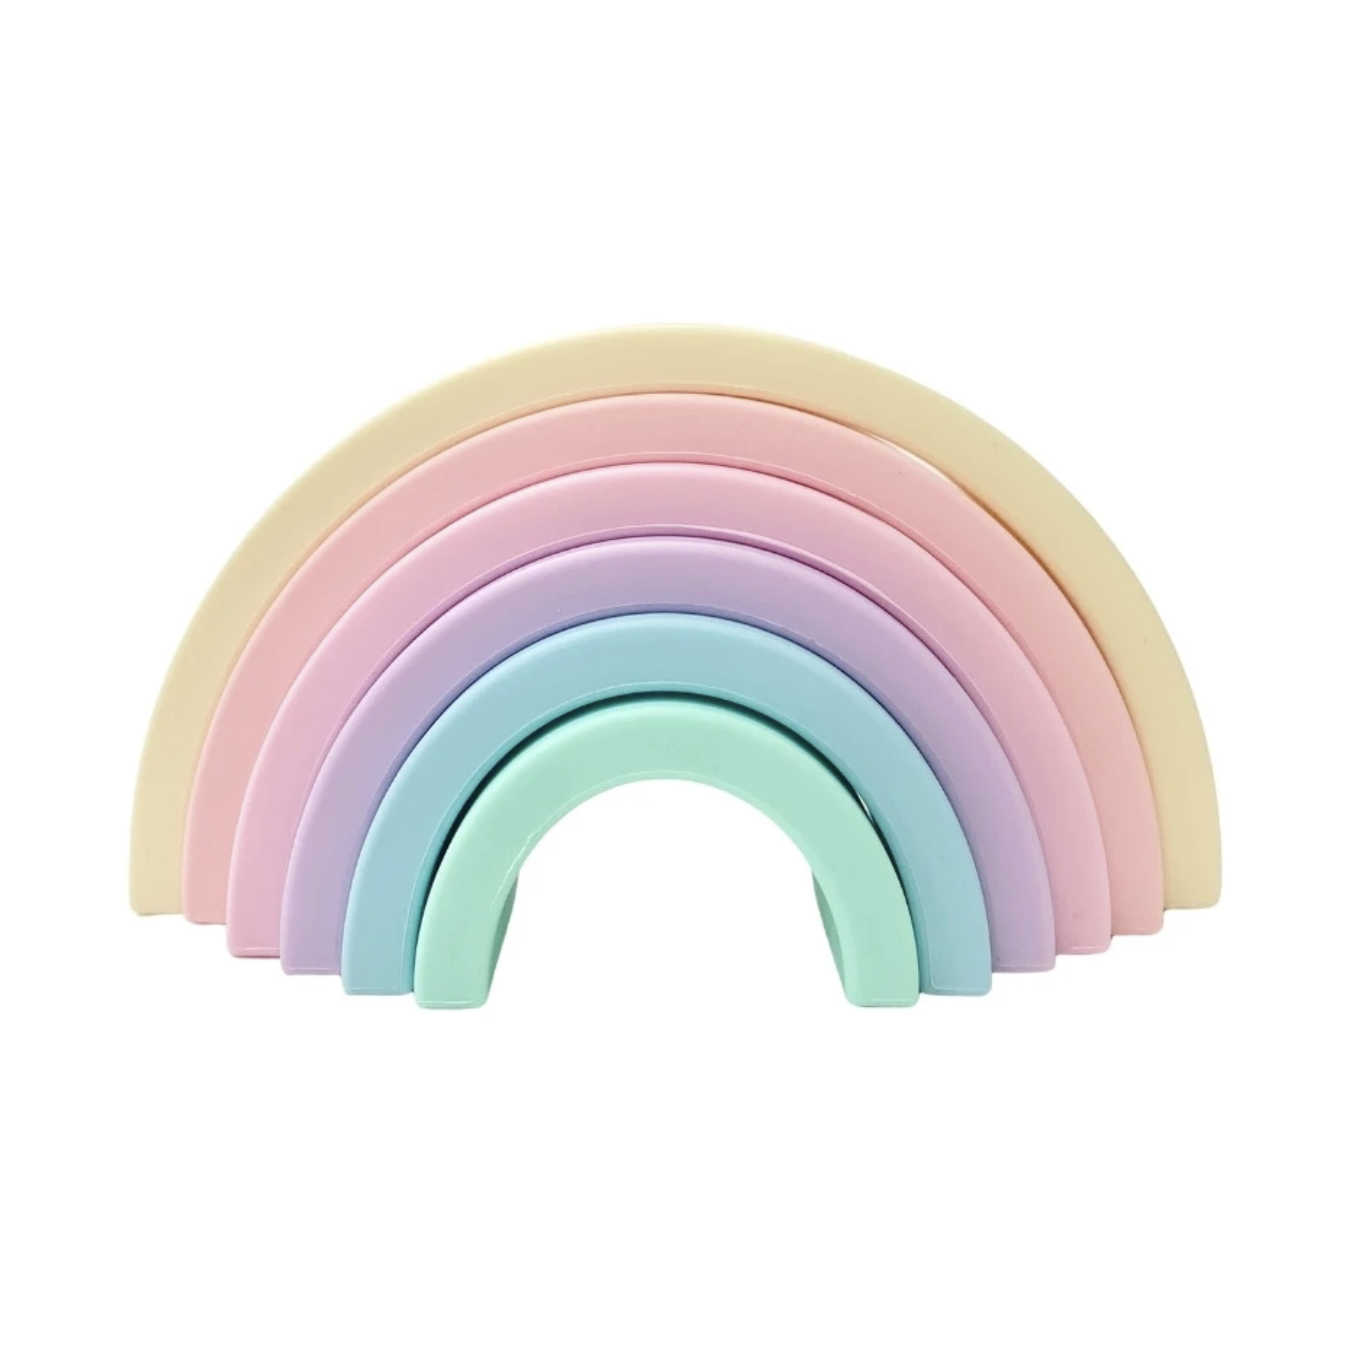 Sugar + Maple Silicone Stacking Rainbow - Pastel 6 Piece-SUGAR AND MAPLE-Little Giant Kidz